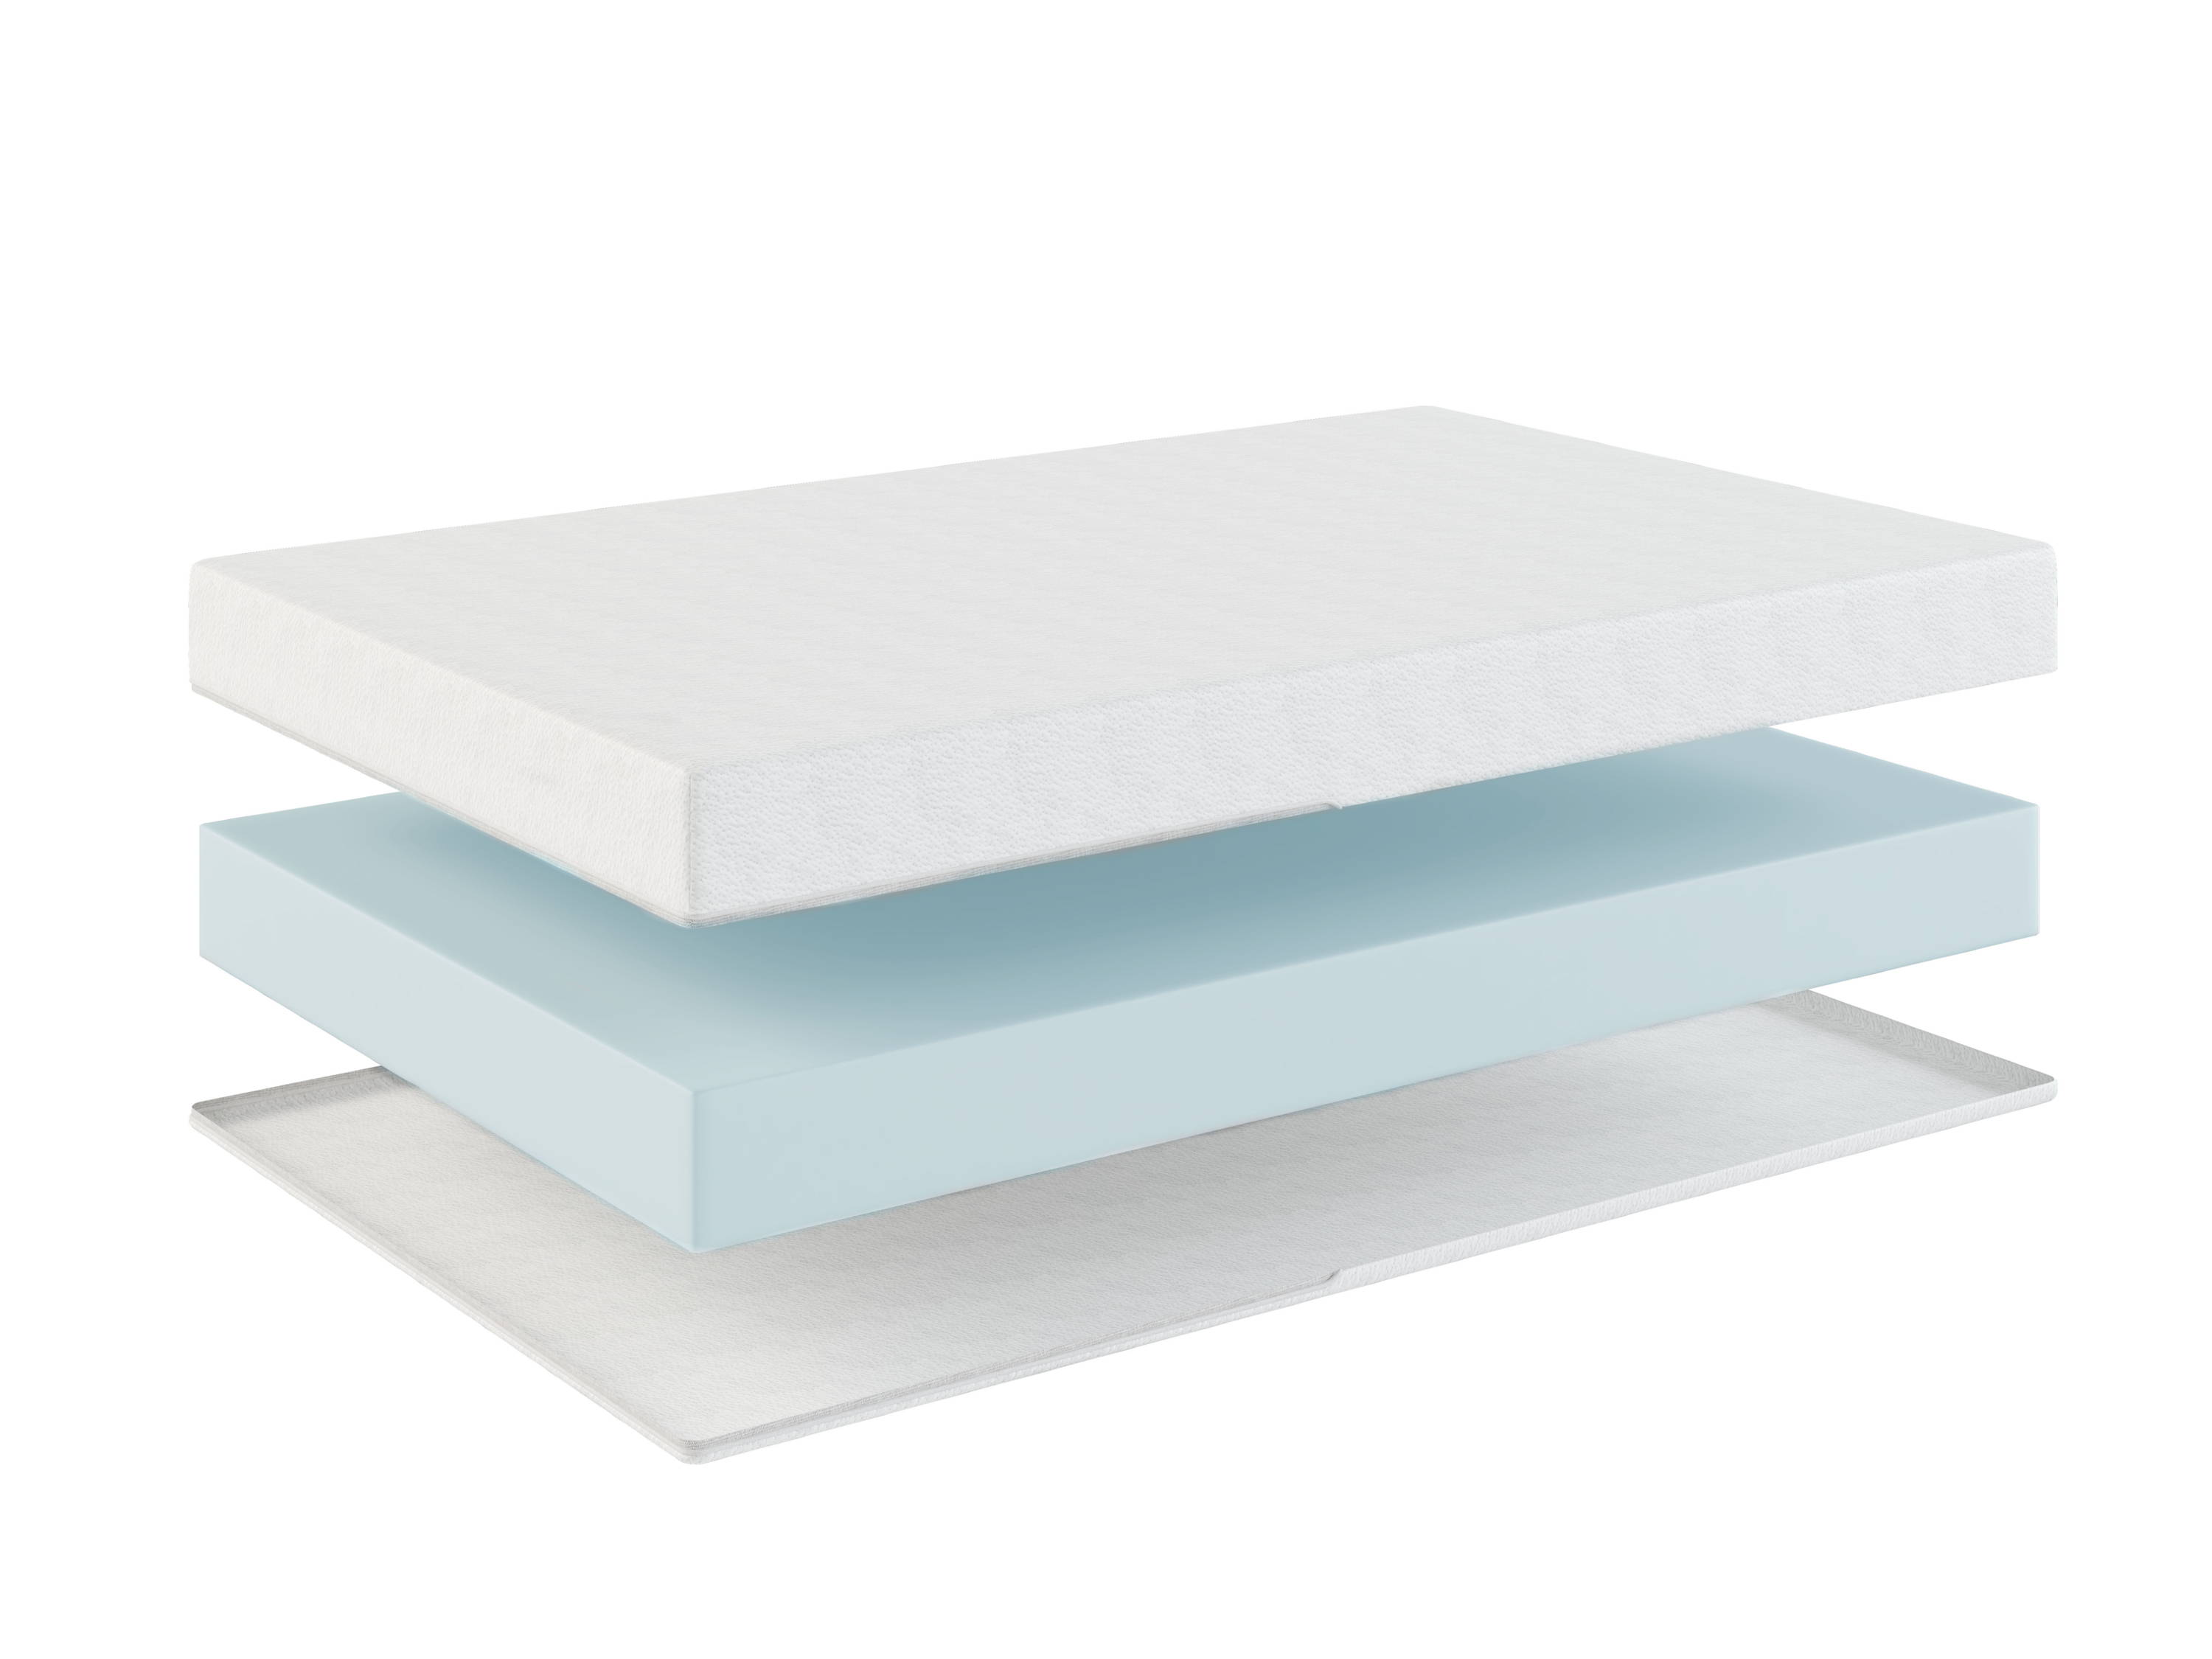 Single-Stage Basics Mini3 breathable mini crib mattress layer showing one internal layer.